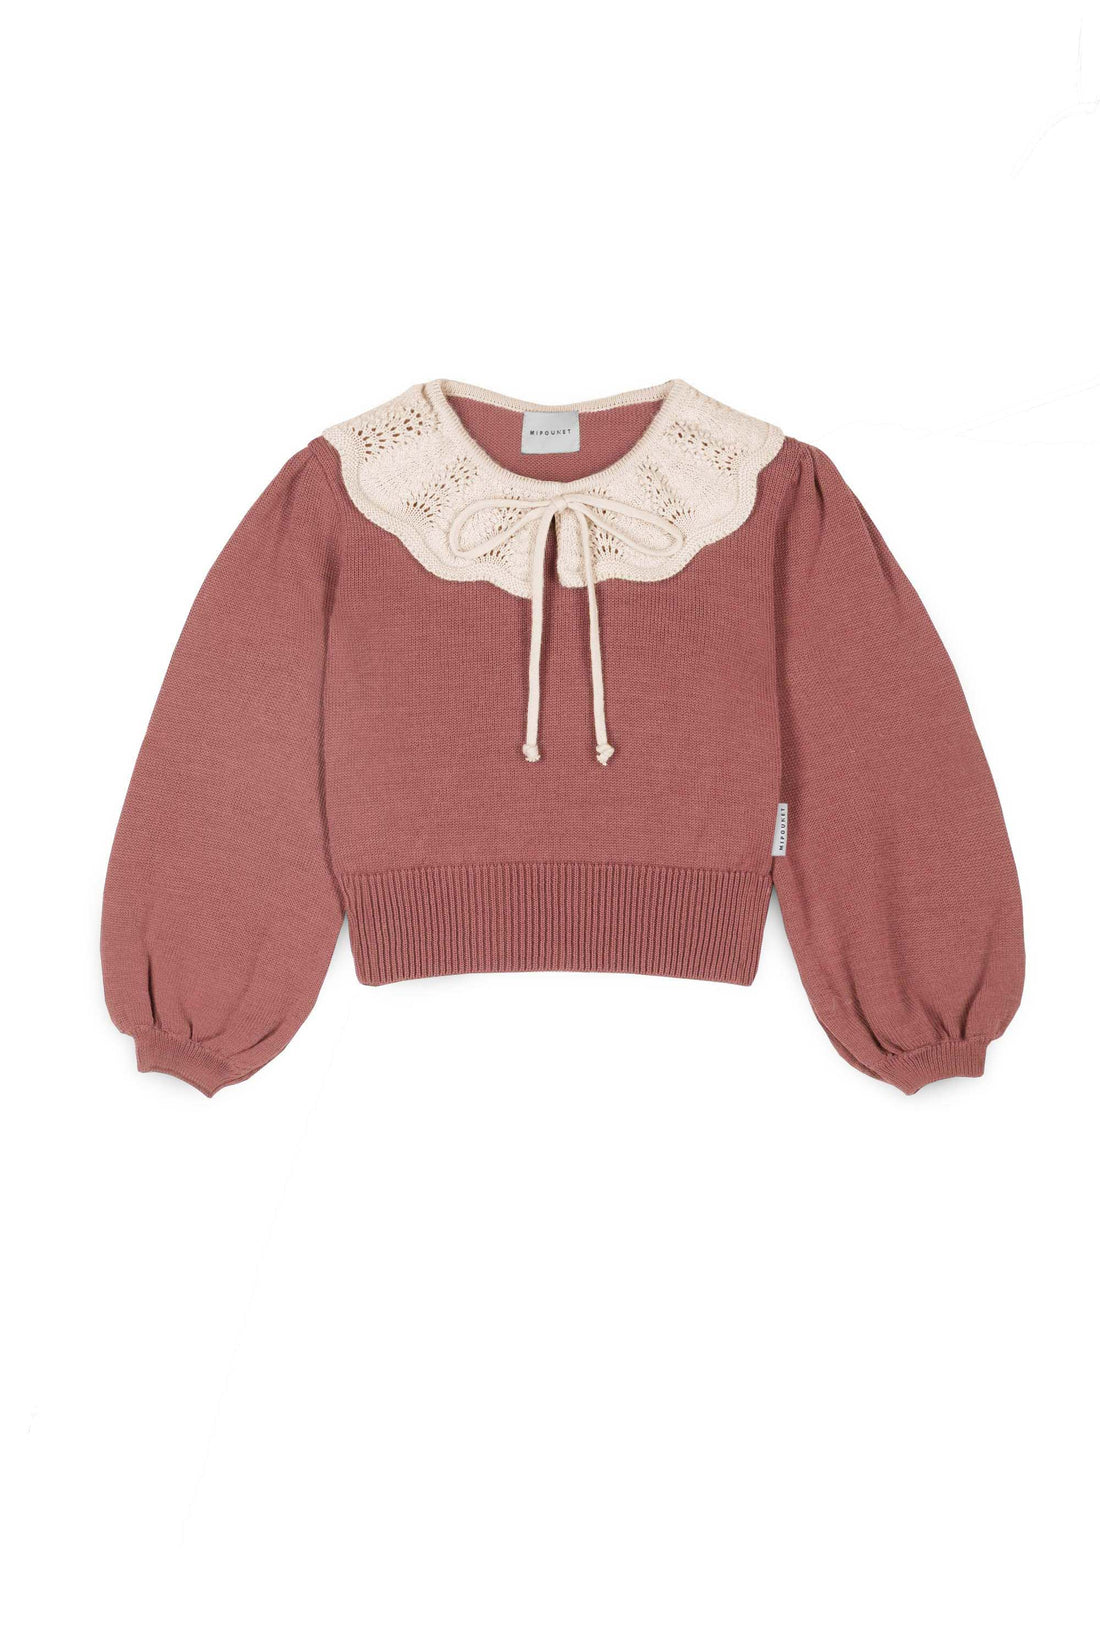 Mipounet - gala collared wool sweater - pink